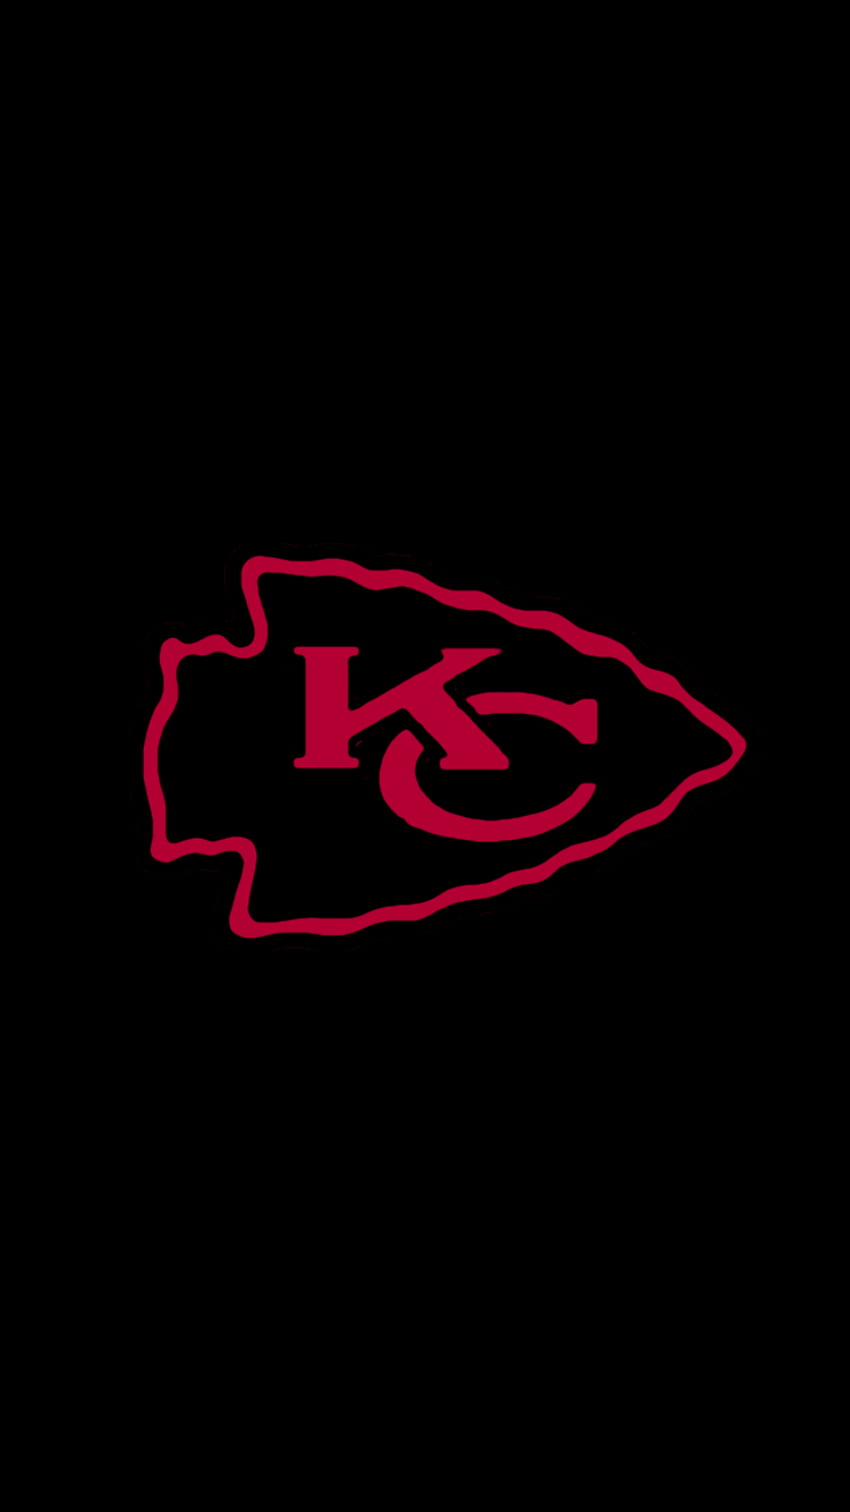 Kansas City Chiefs background Kansas